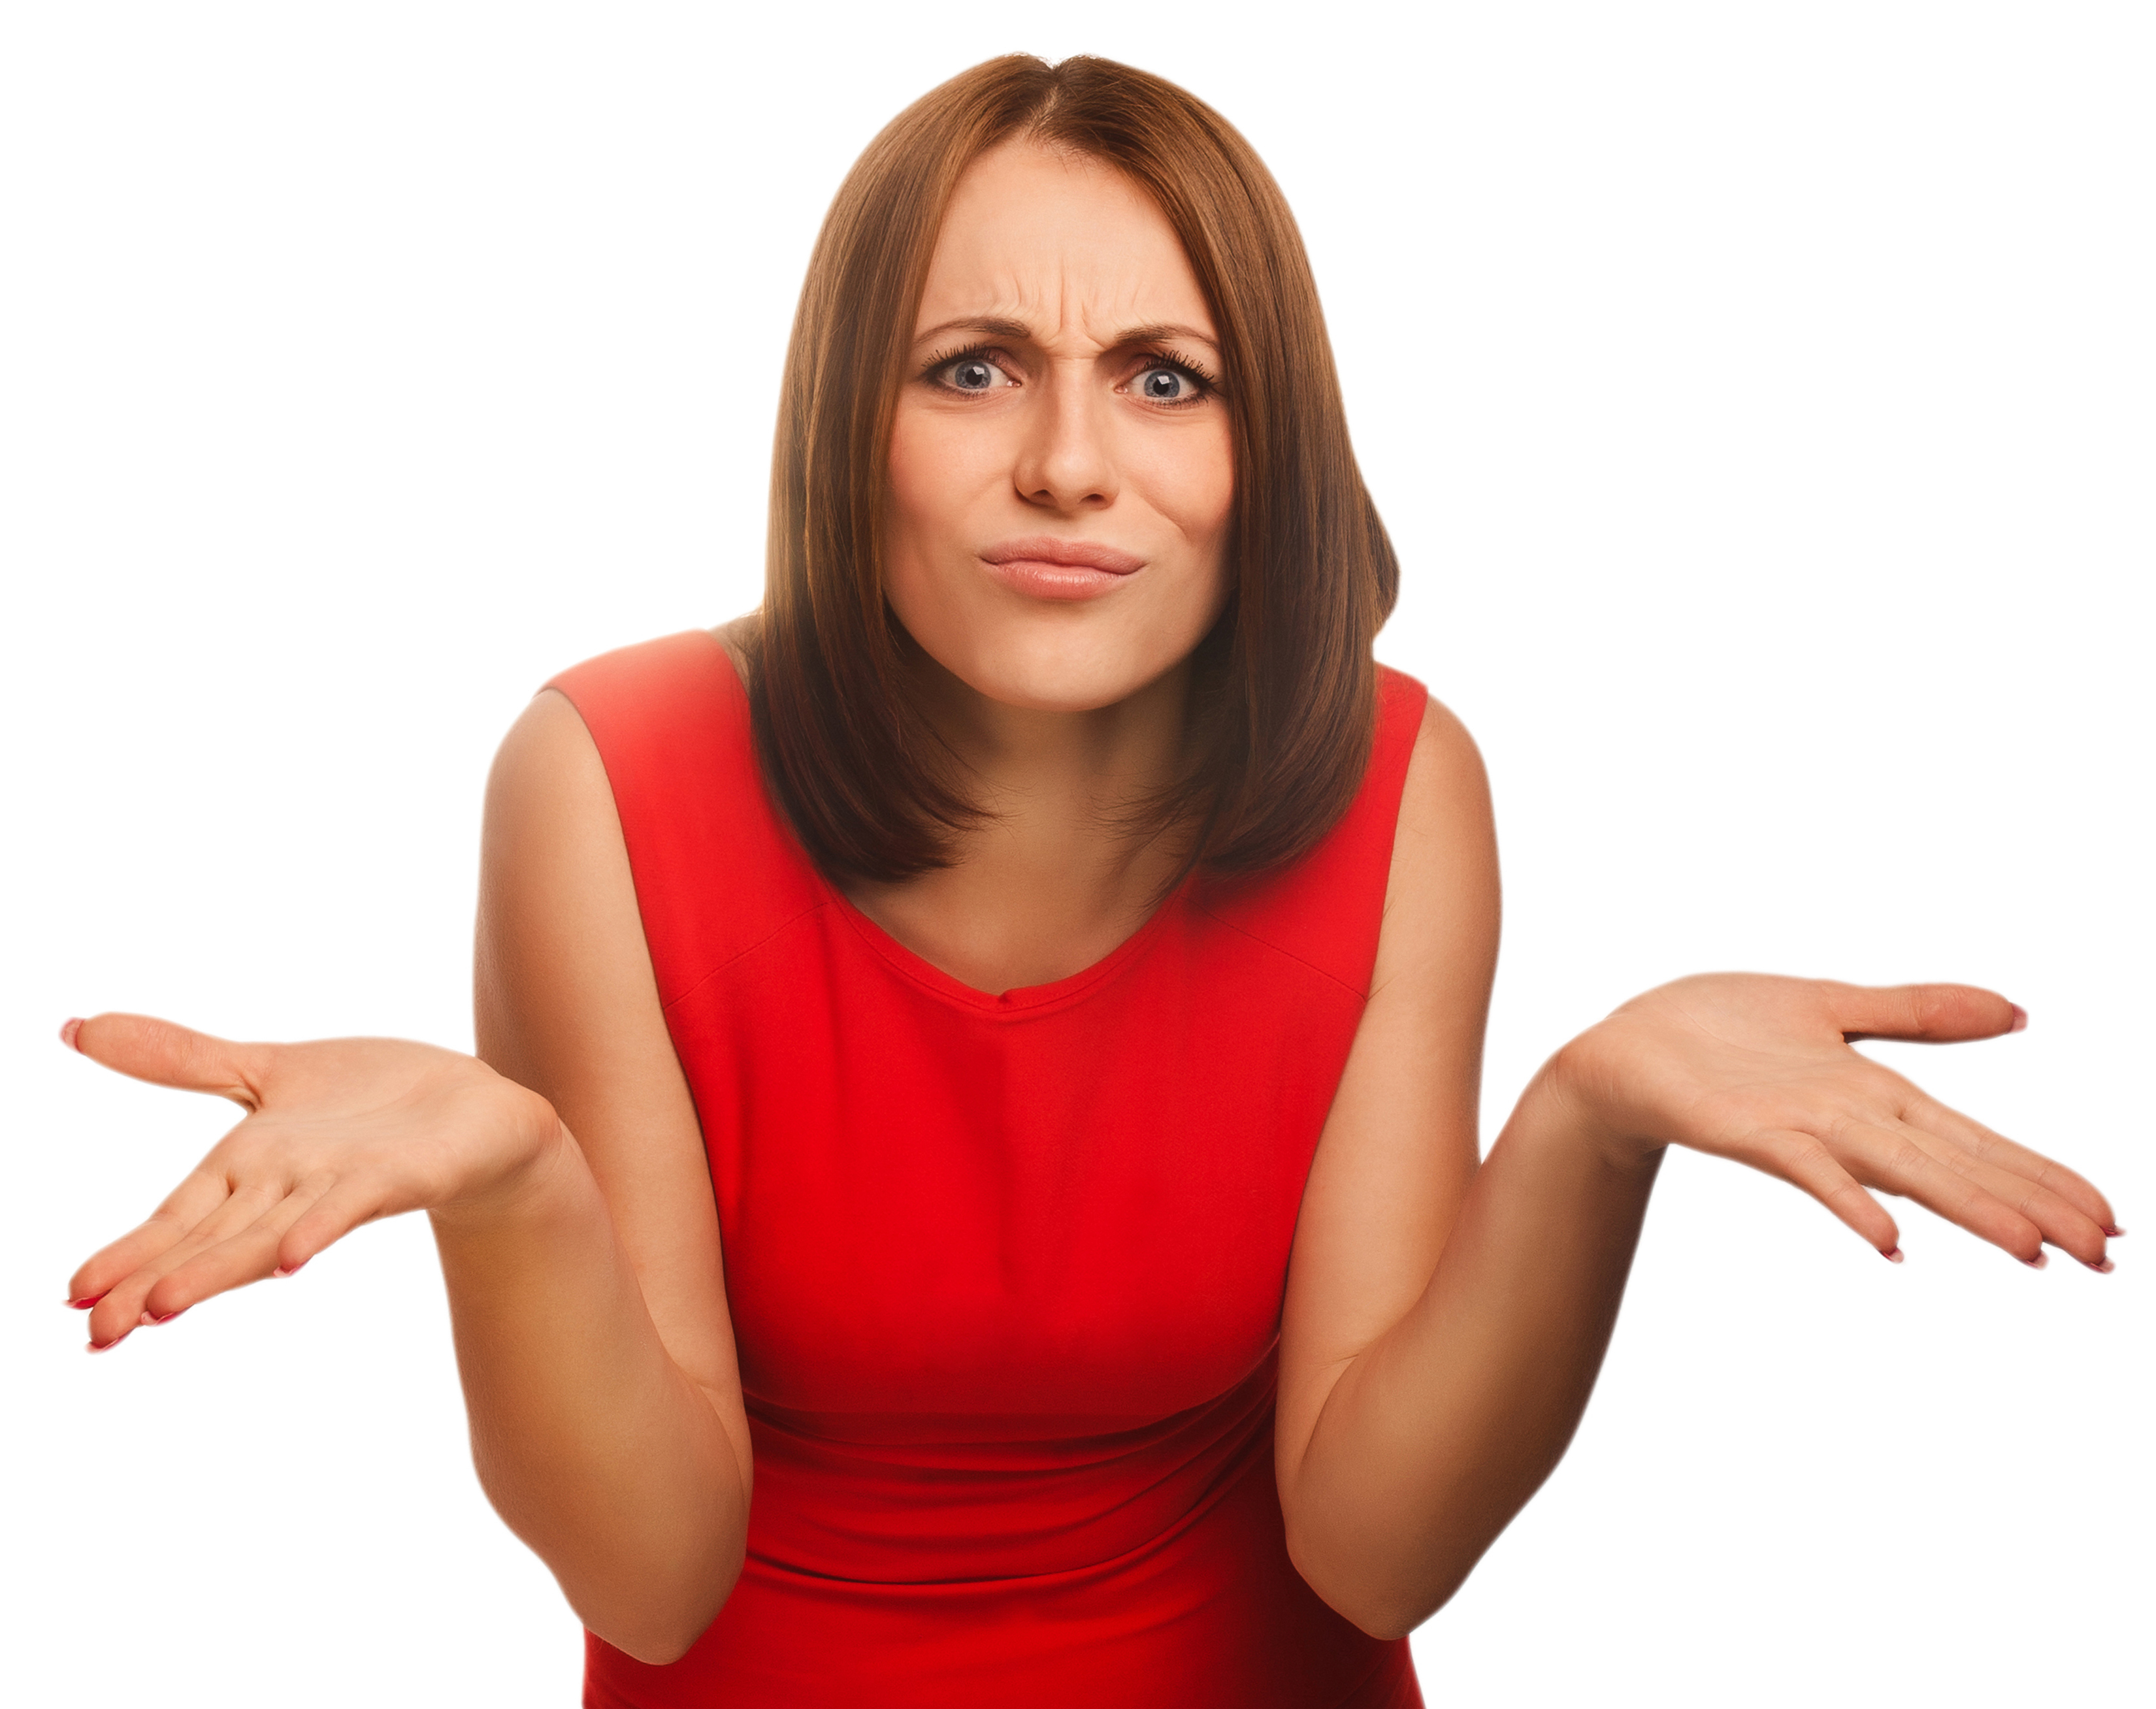 Woman gesturing being upset | Source: Shutterstock